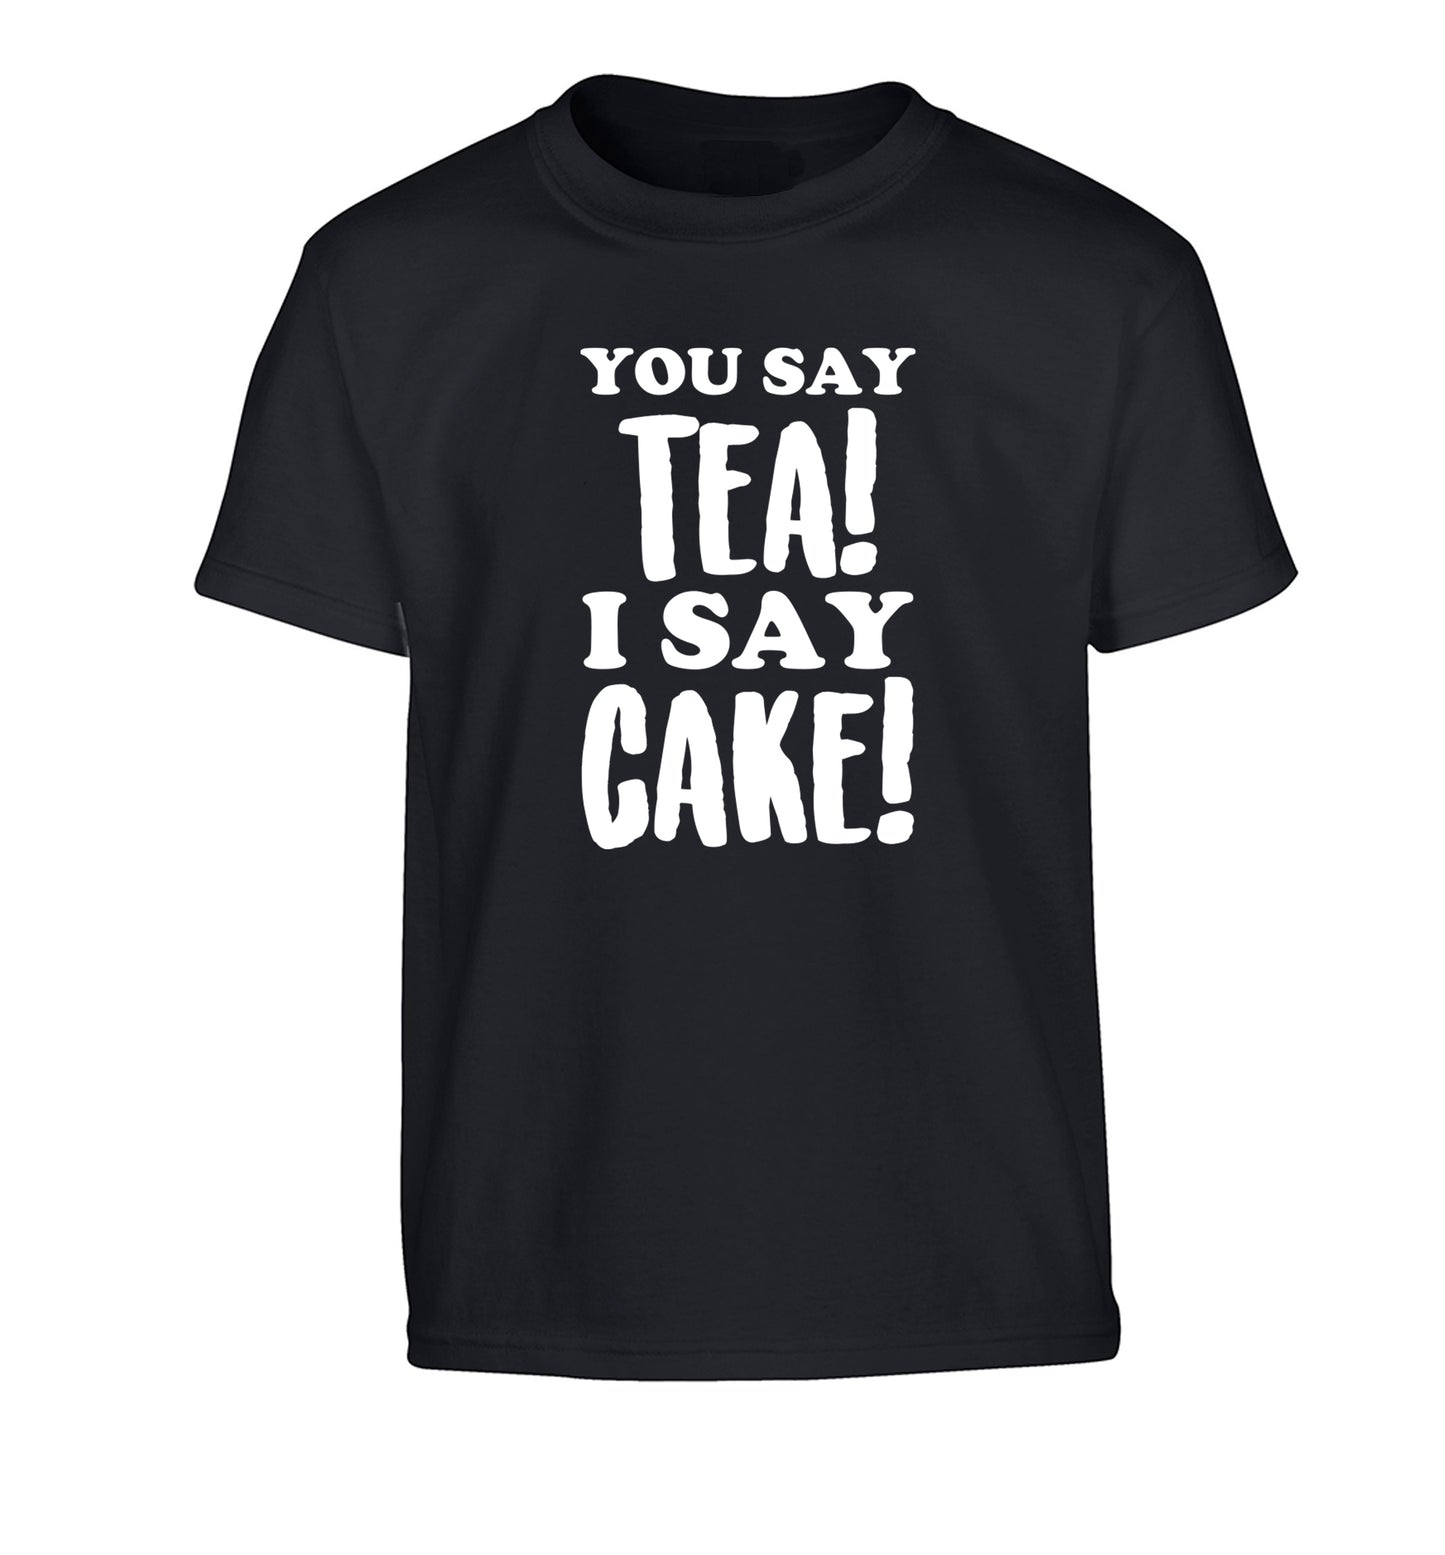 You say tea I say cake! Children's black Tshirt 12-14 Years